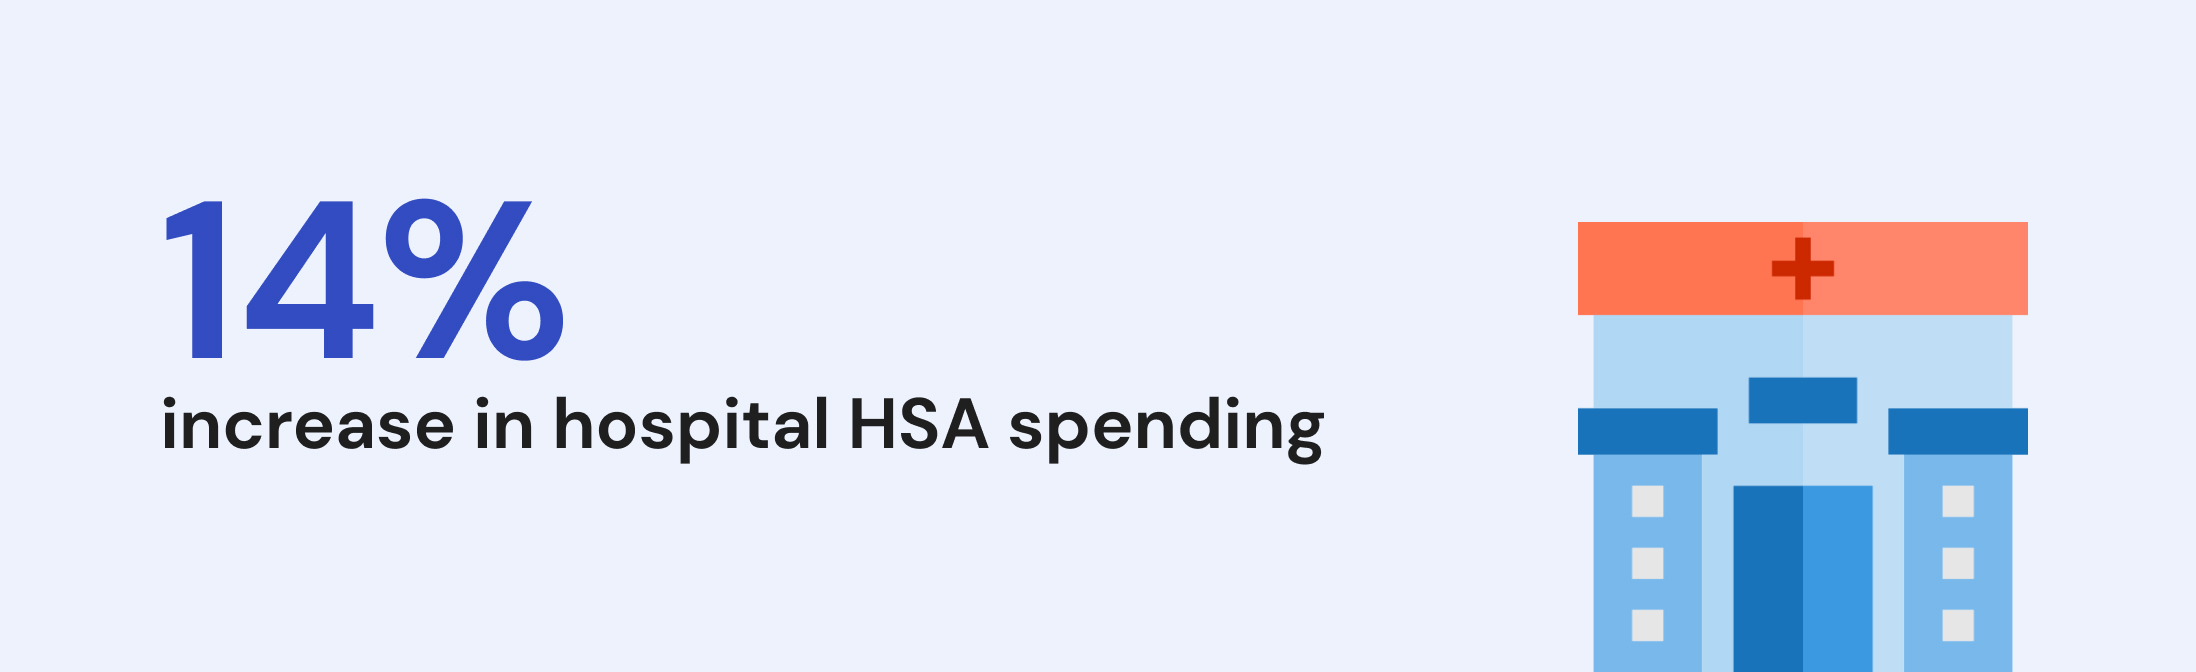 HSA snapshot hospital spending